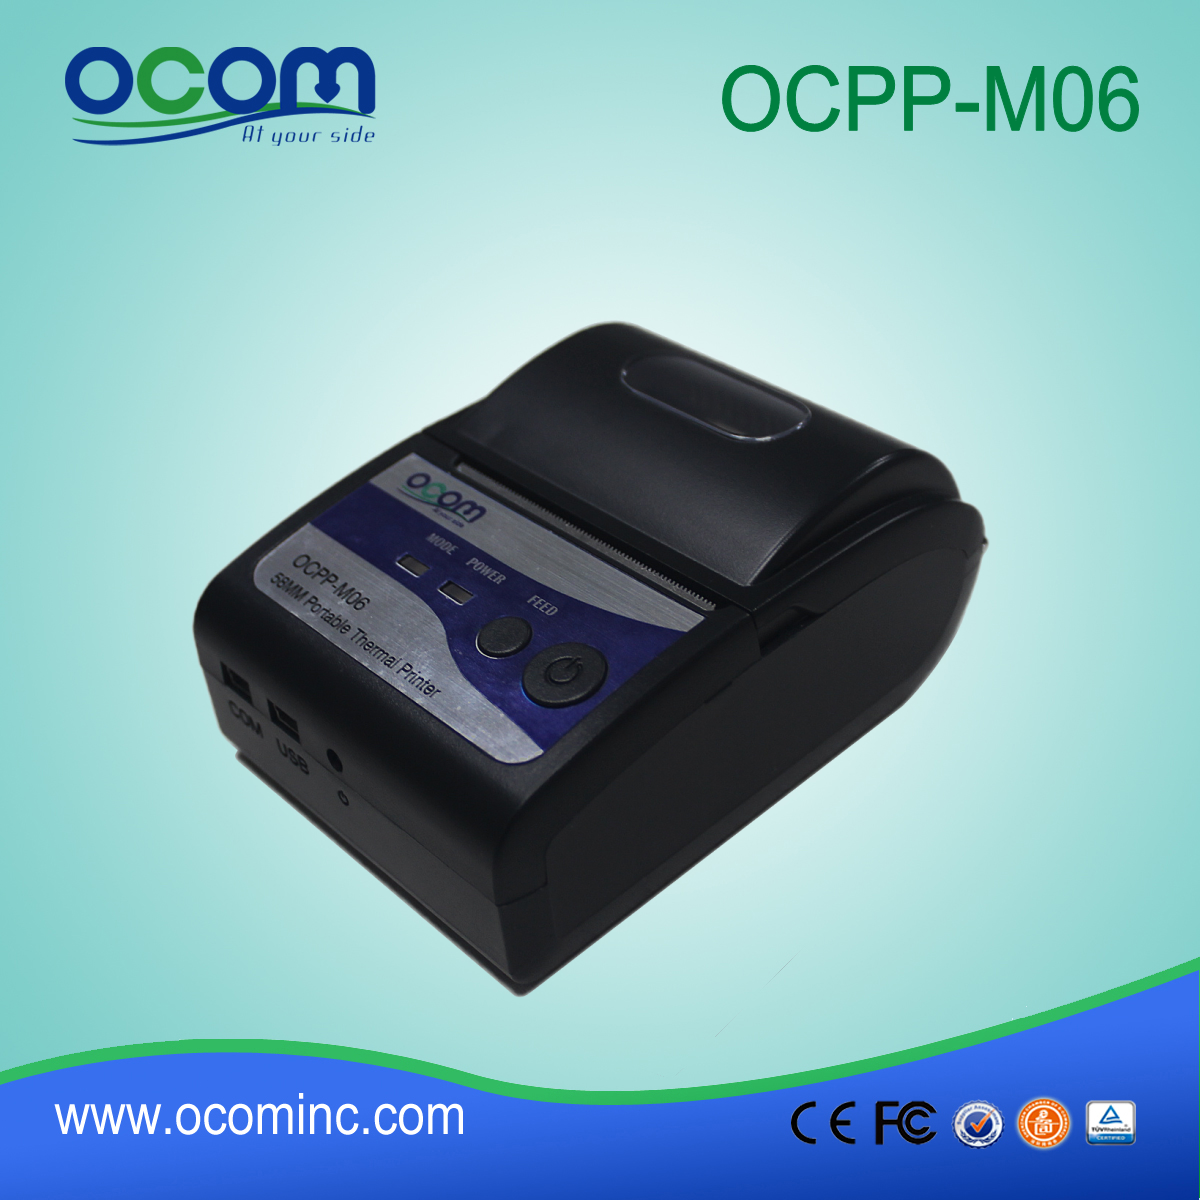 OCPP-M06：OCOM热销58毫米迷你便携式蓝牙热敏打印机